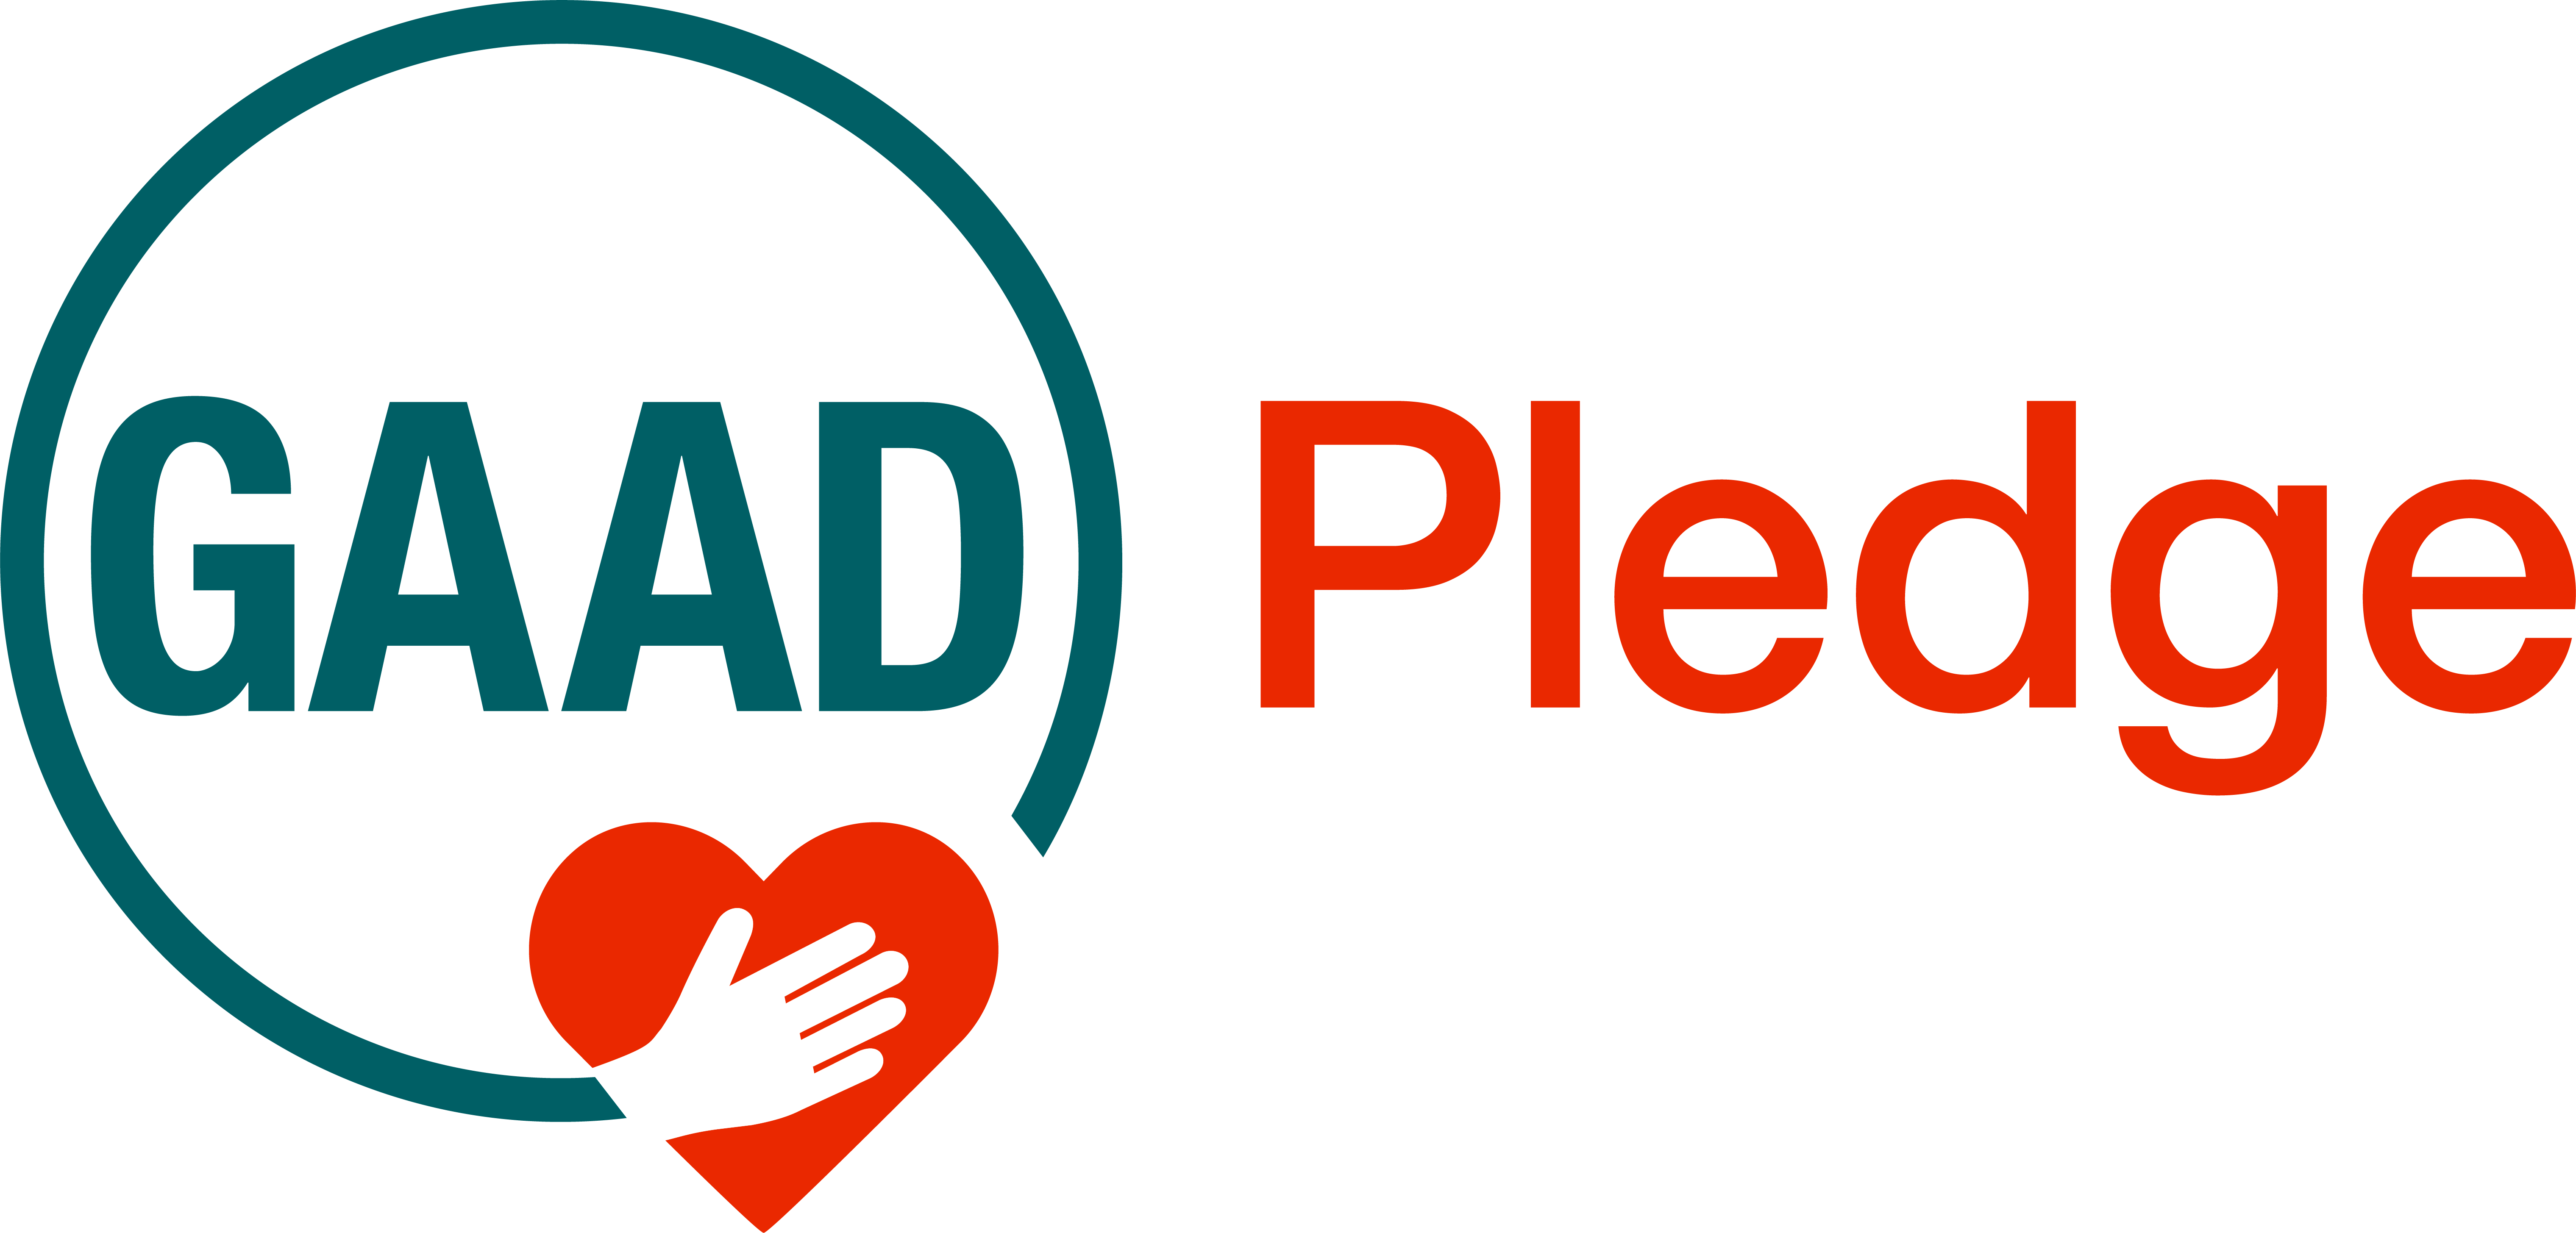 GAAD Pledge